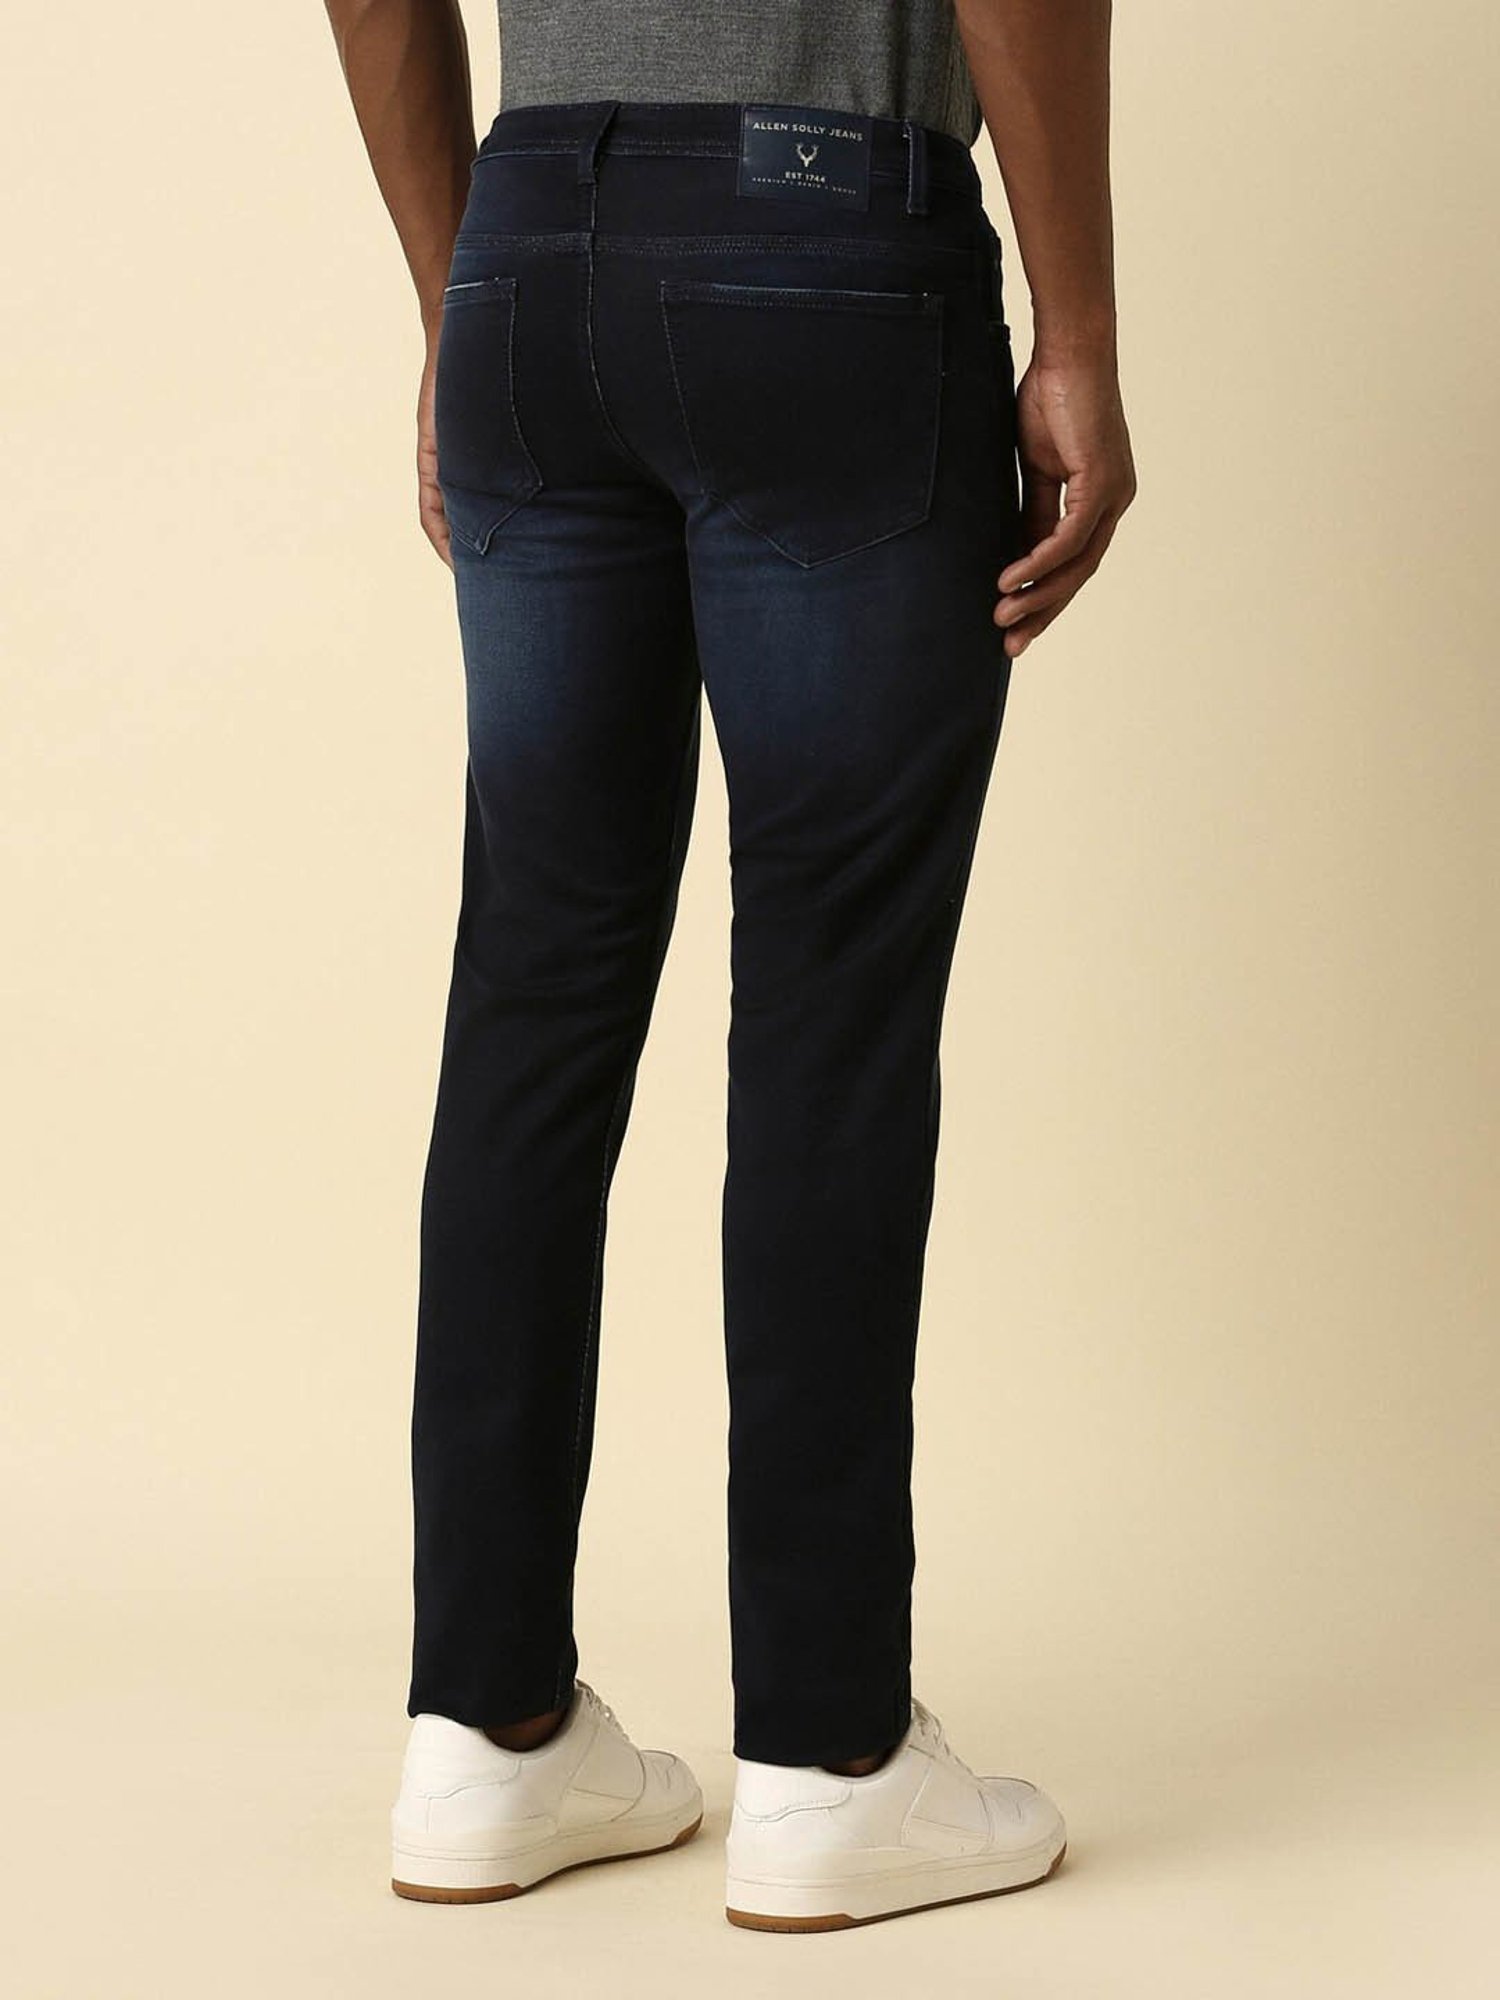 Buy Allen Solly Women Jeans at Amazon.in